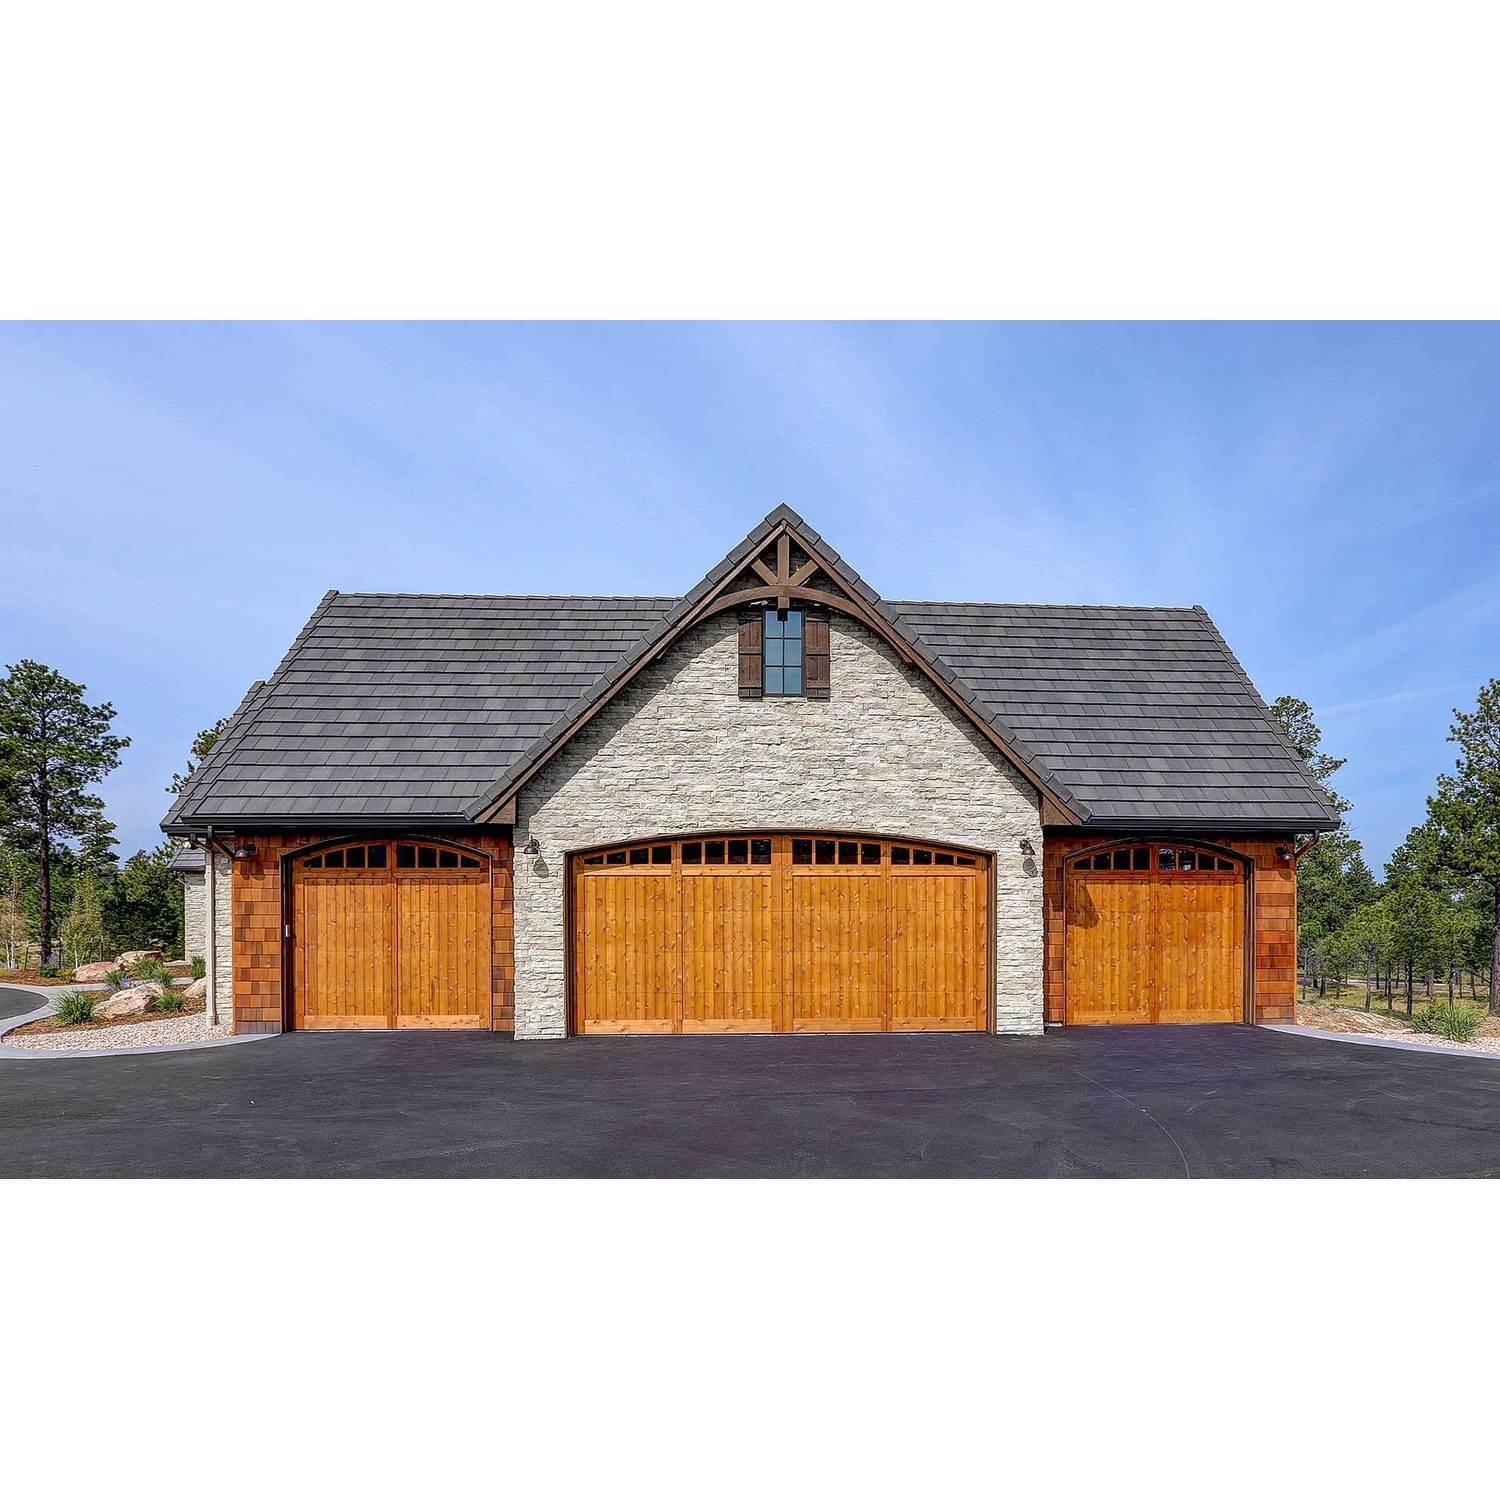 43. Galiant Homes xây dựng tại 4783 Farmingdale Dr, Colorado Springs, CO 80918